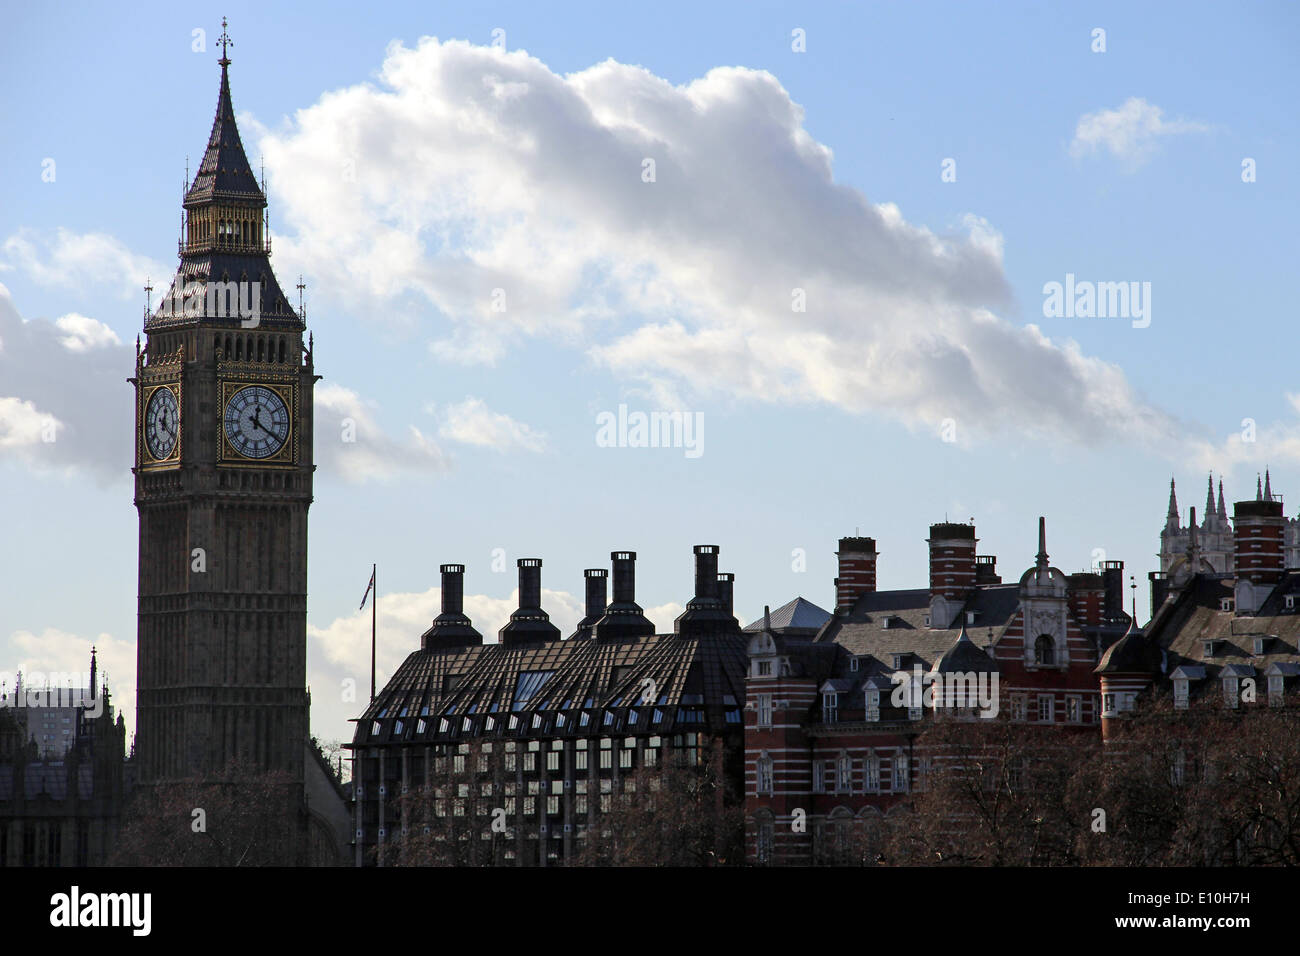 London: Big Ben (Elizabeth Tower) Stock Photo